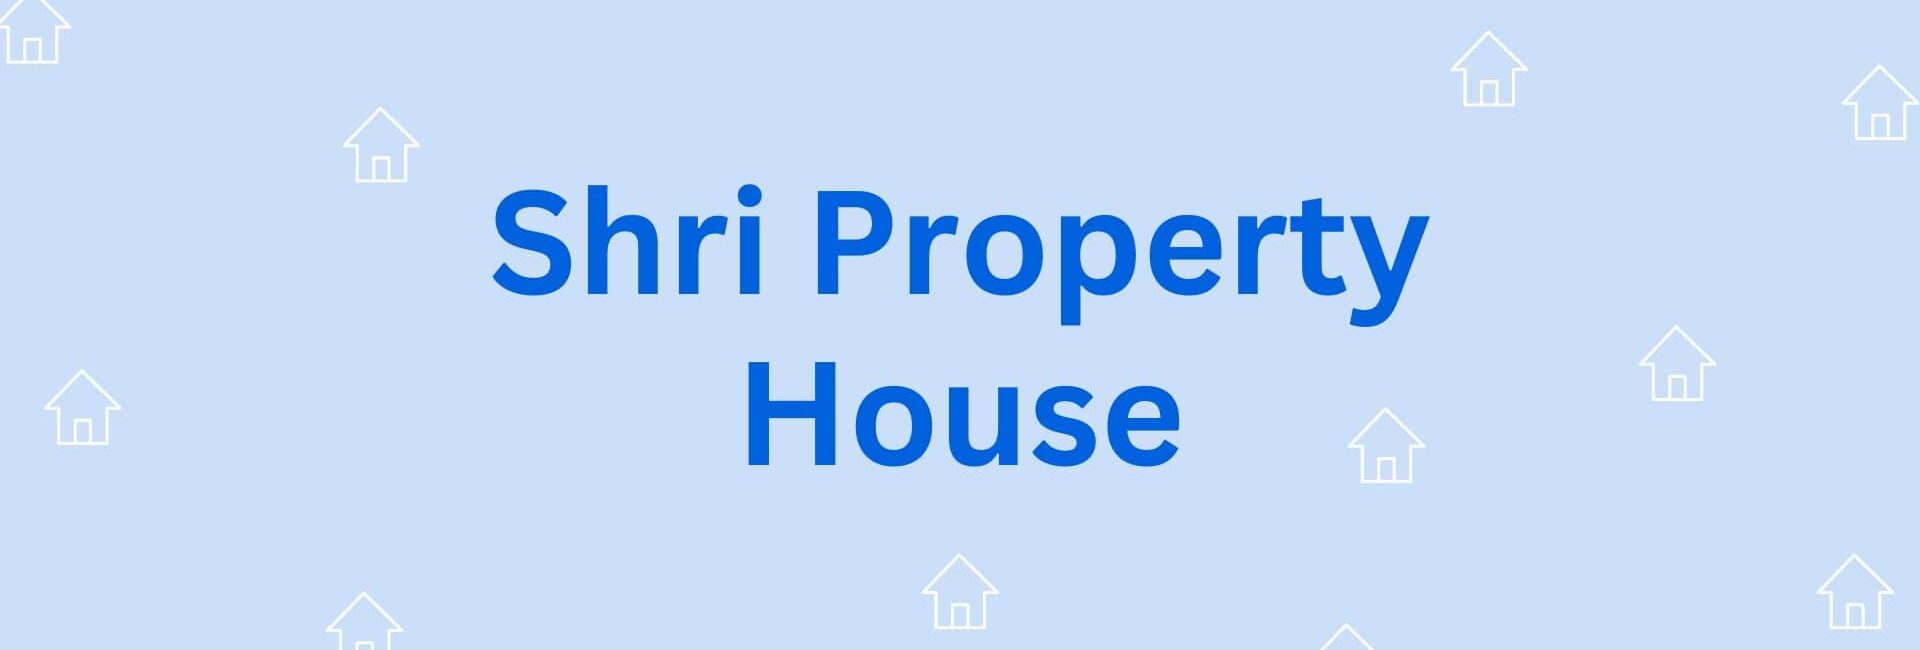 Shri Property House - Property Dealer in Hisar